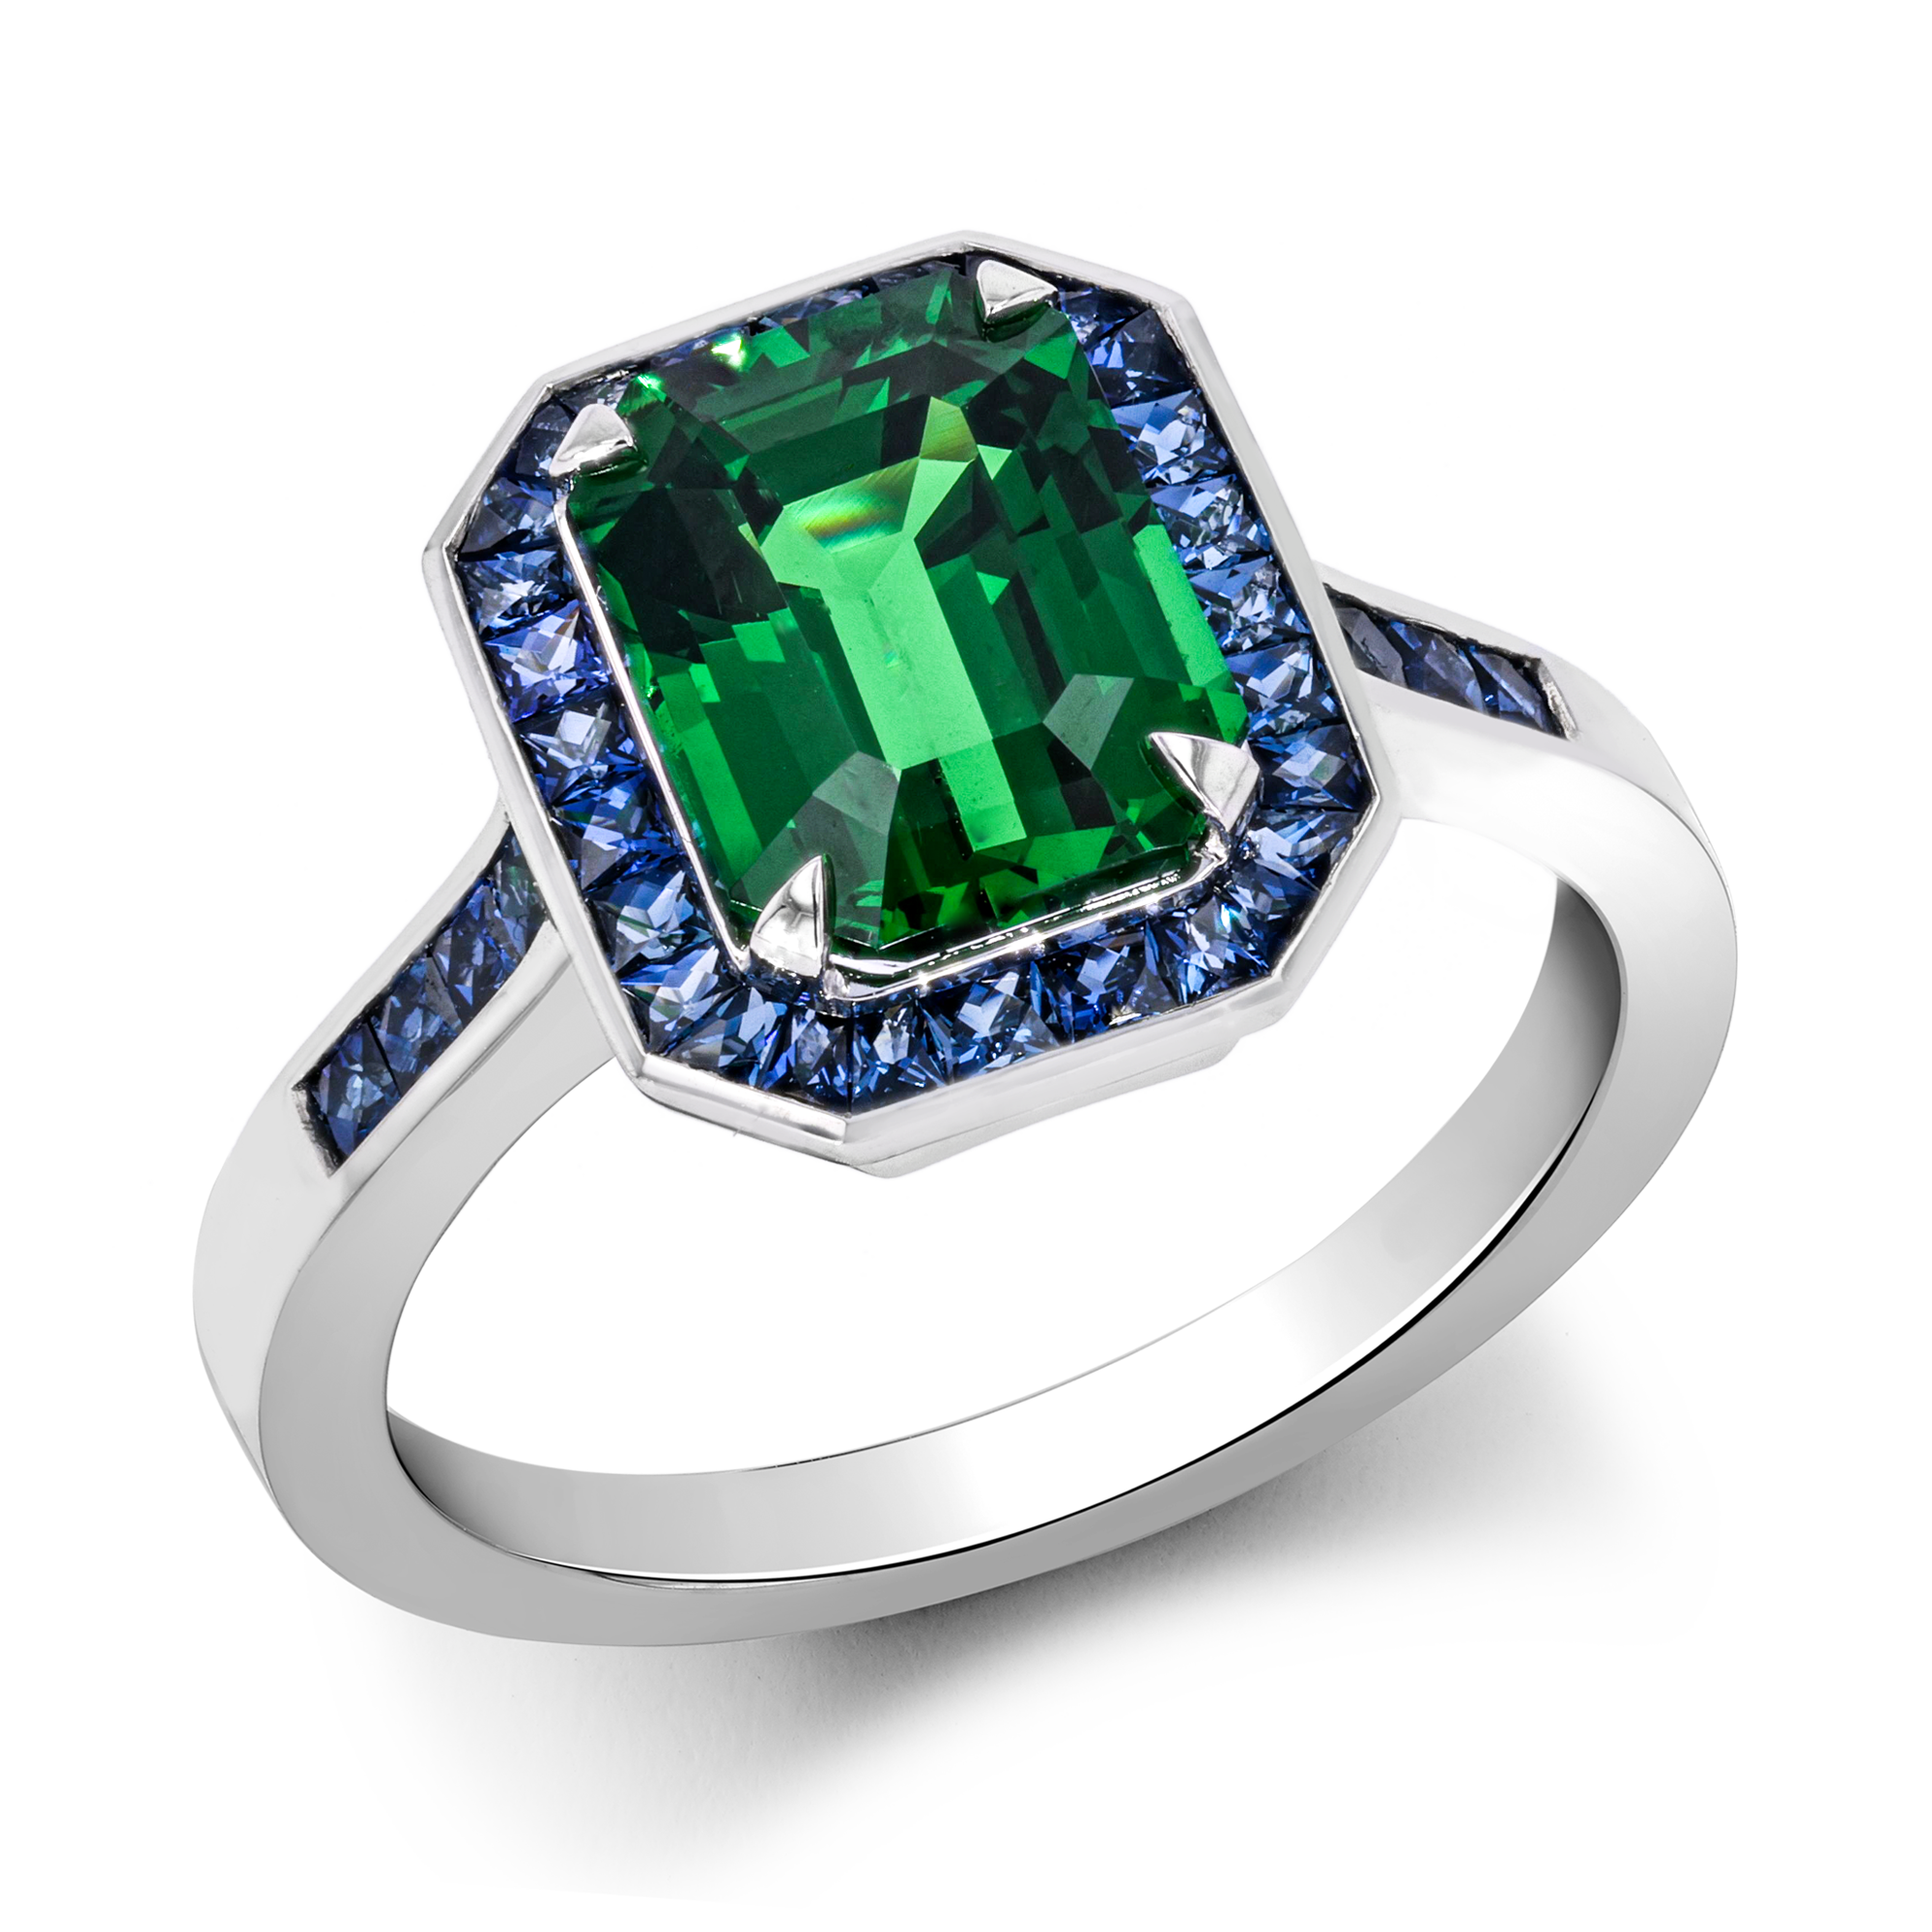 Gatsby 3.07ct Tsavorite Garnet Ring with Blue Sapphire Surround Emerald & French Cut, Claw & Channel Set_1